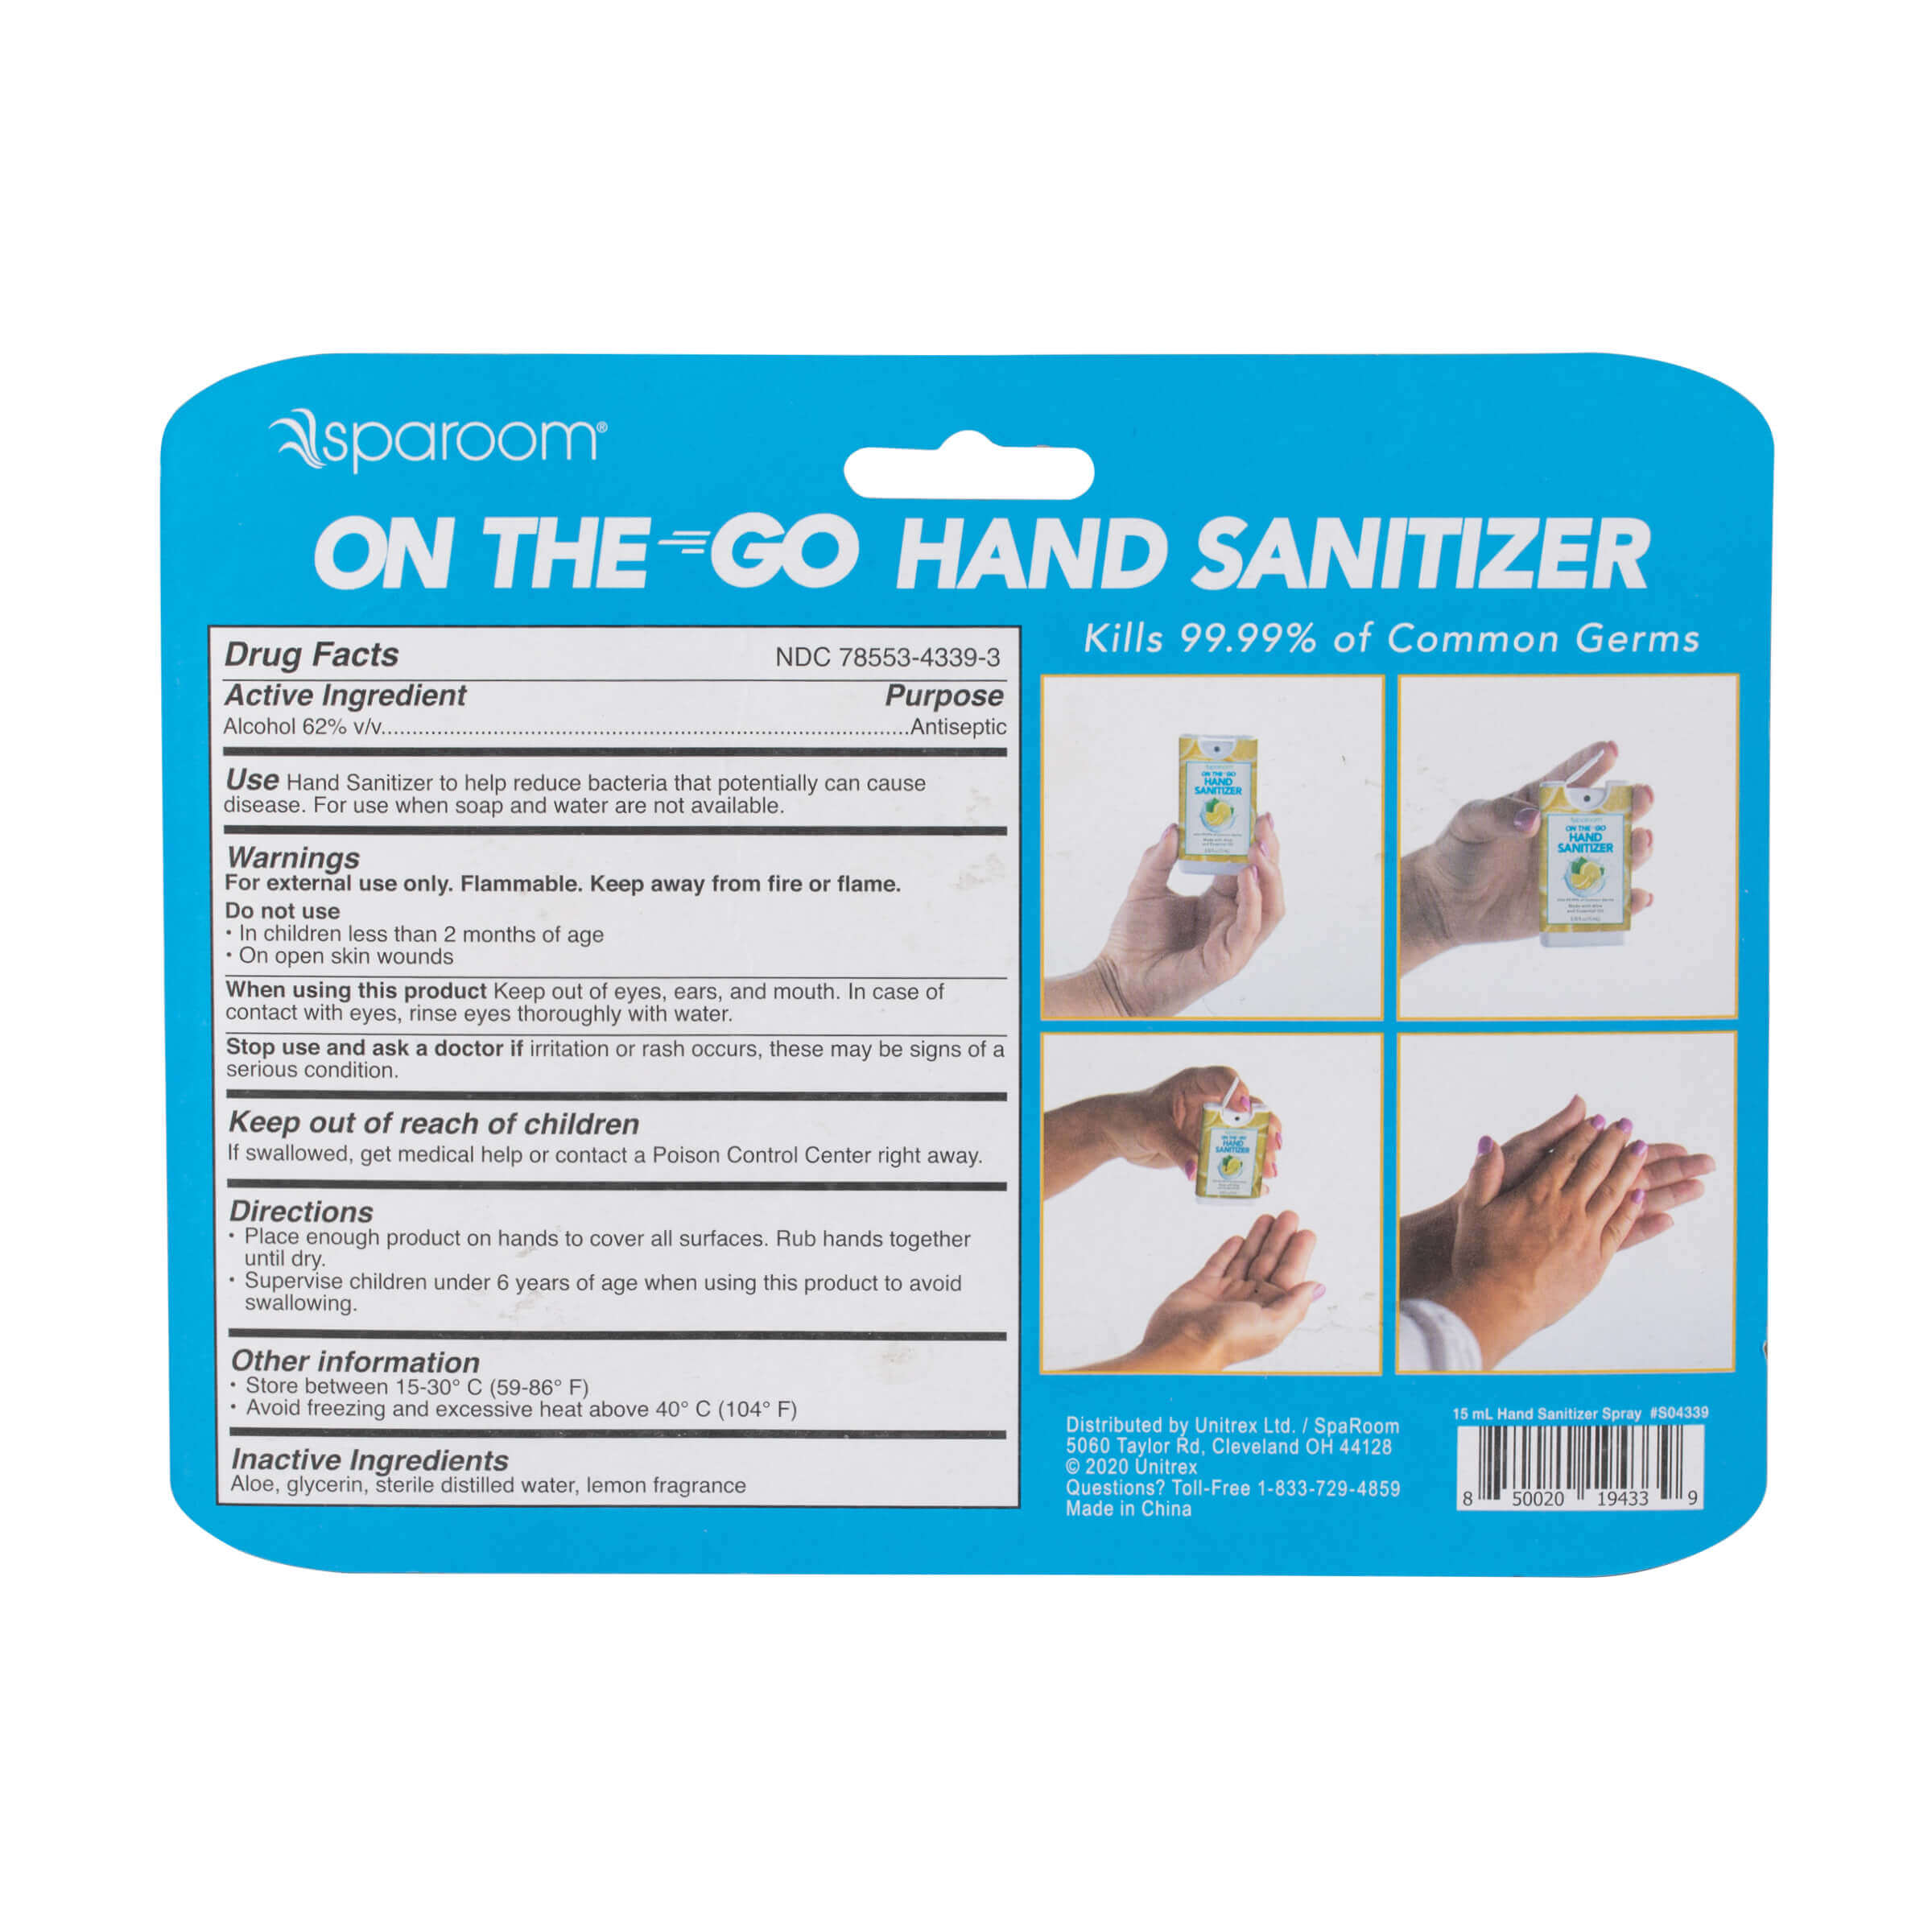 On The Go Hand Sanitizing Spray - 15mL - 3 Pack